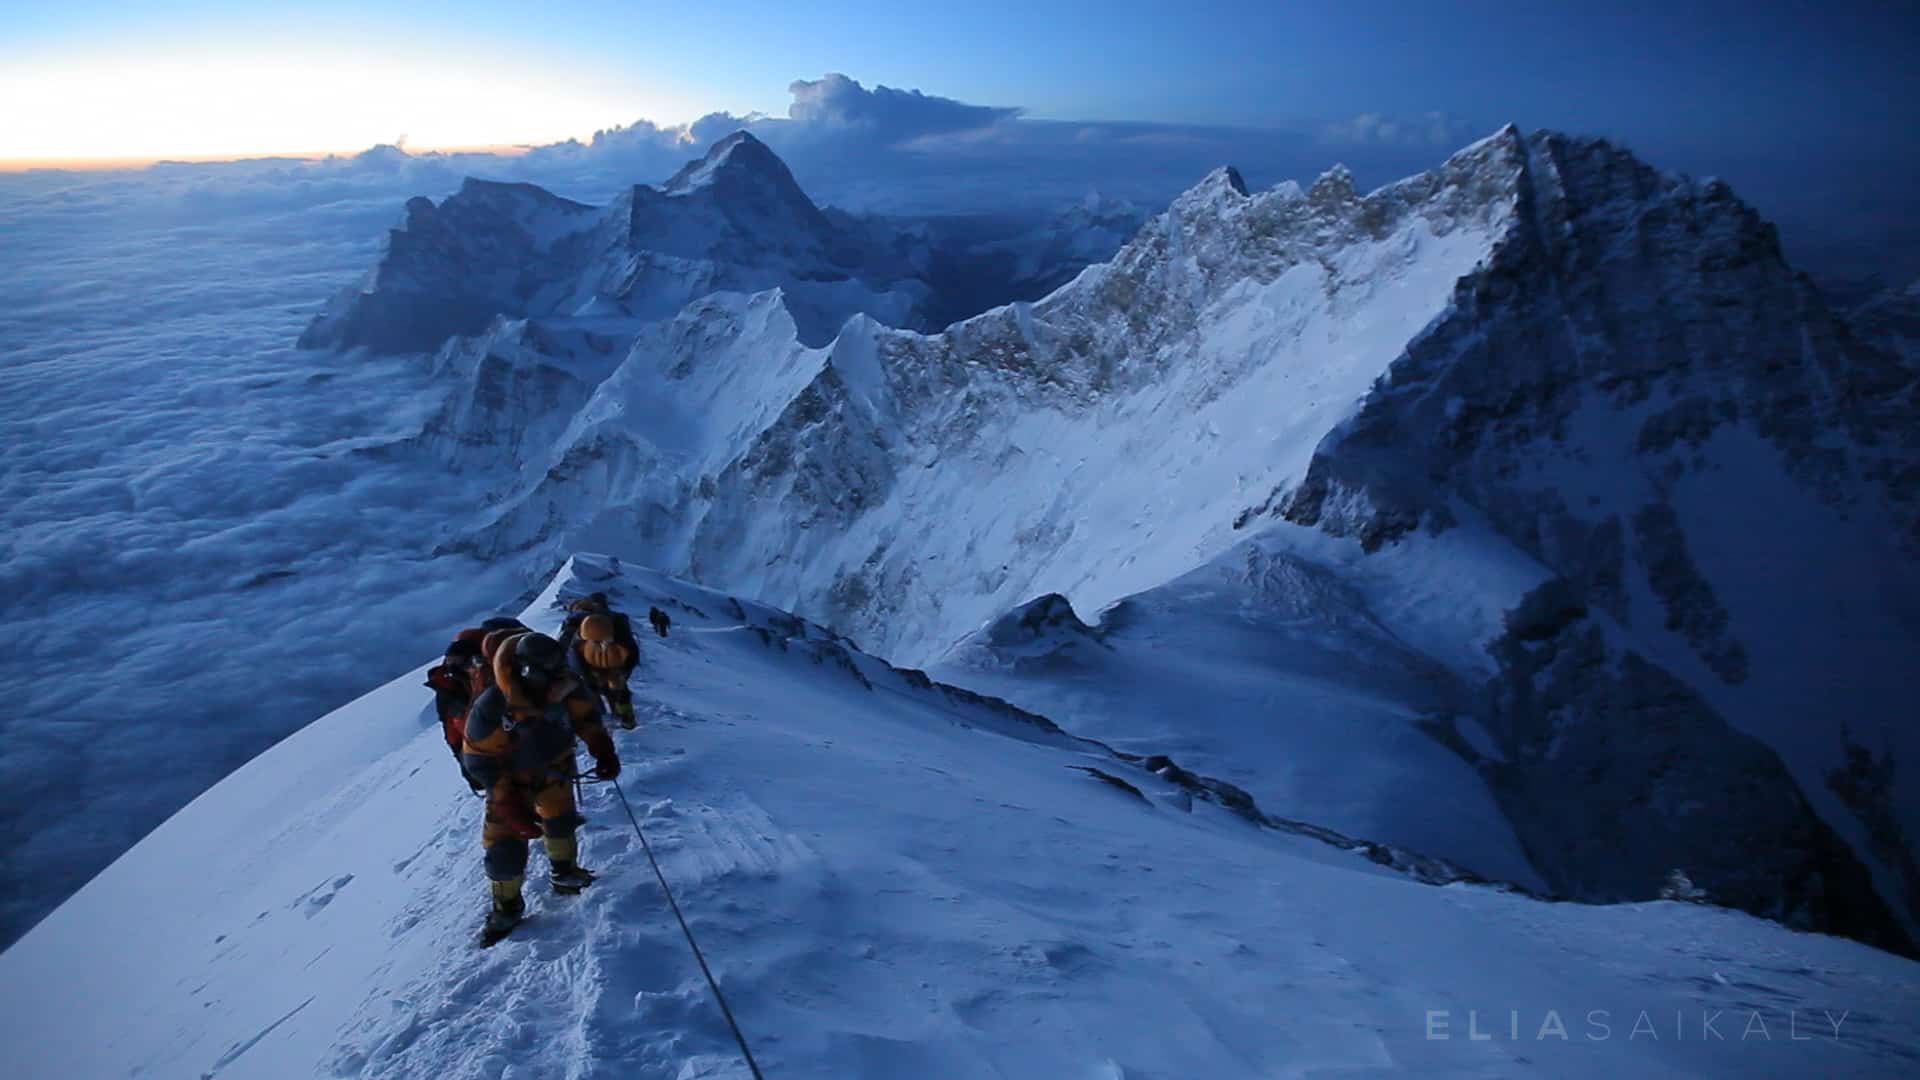 Climbers on the balcony of Mt Everest at first light - Elia Saikaly